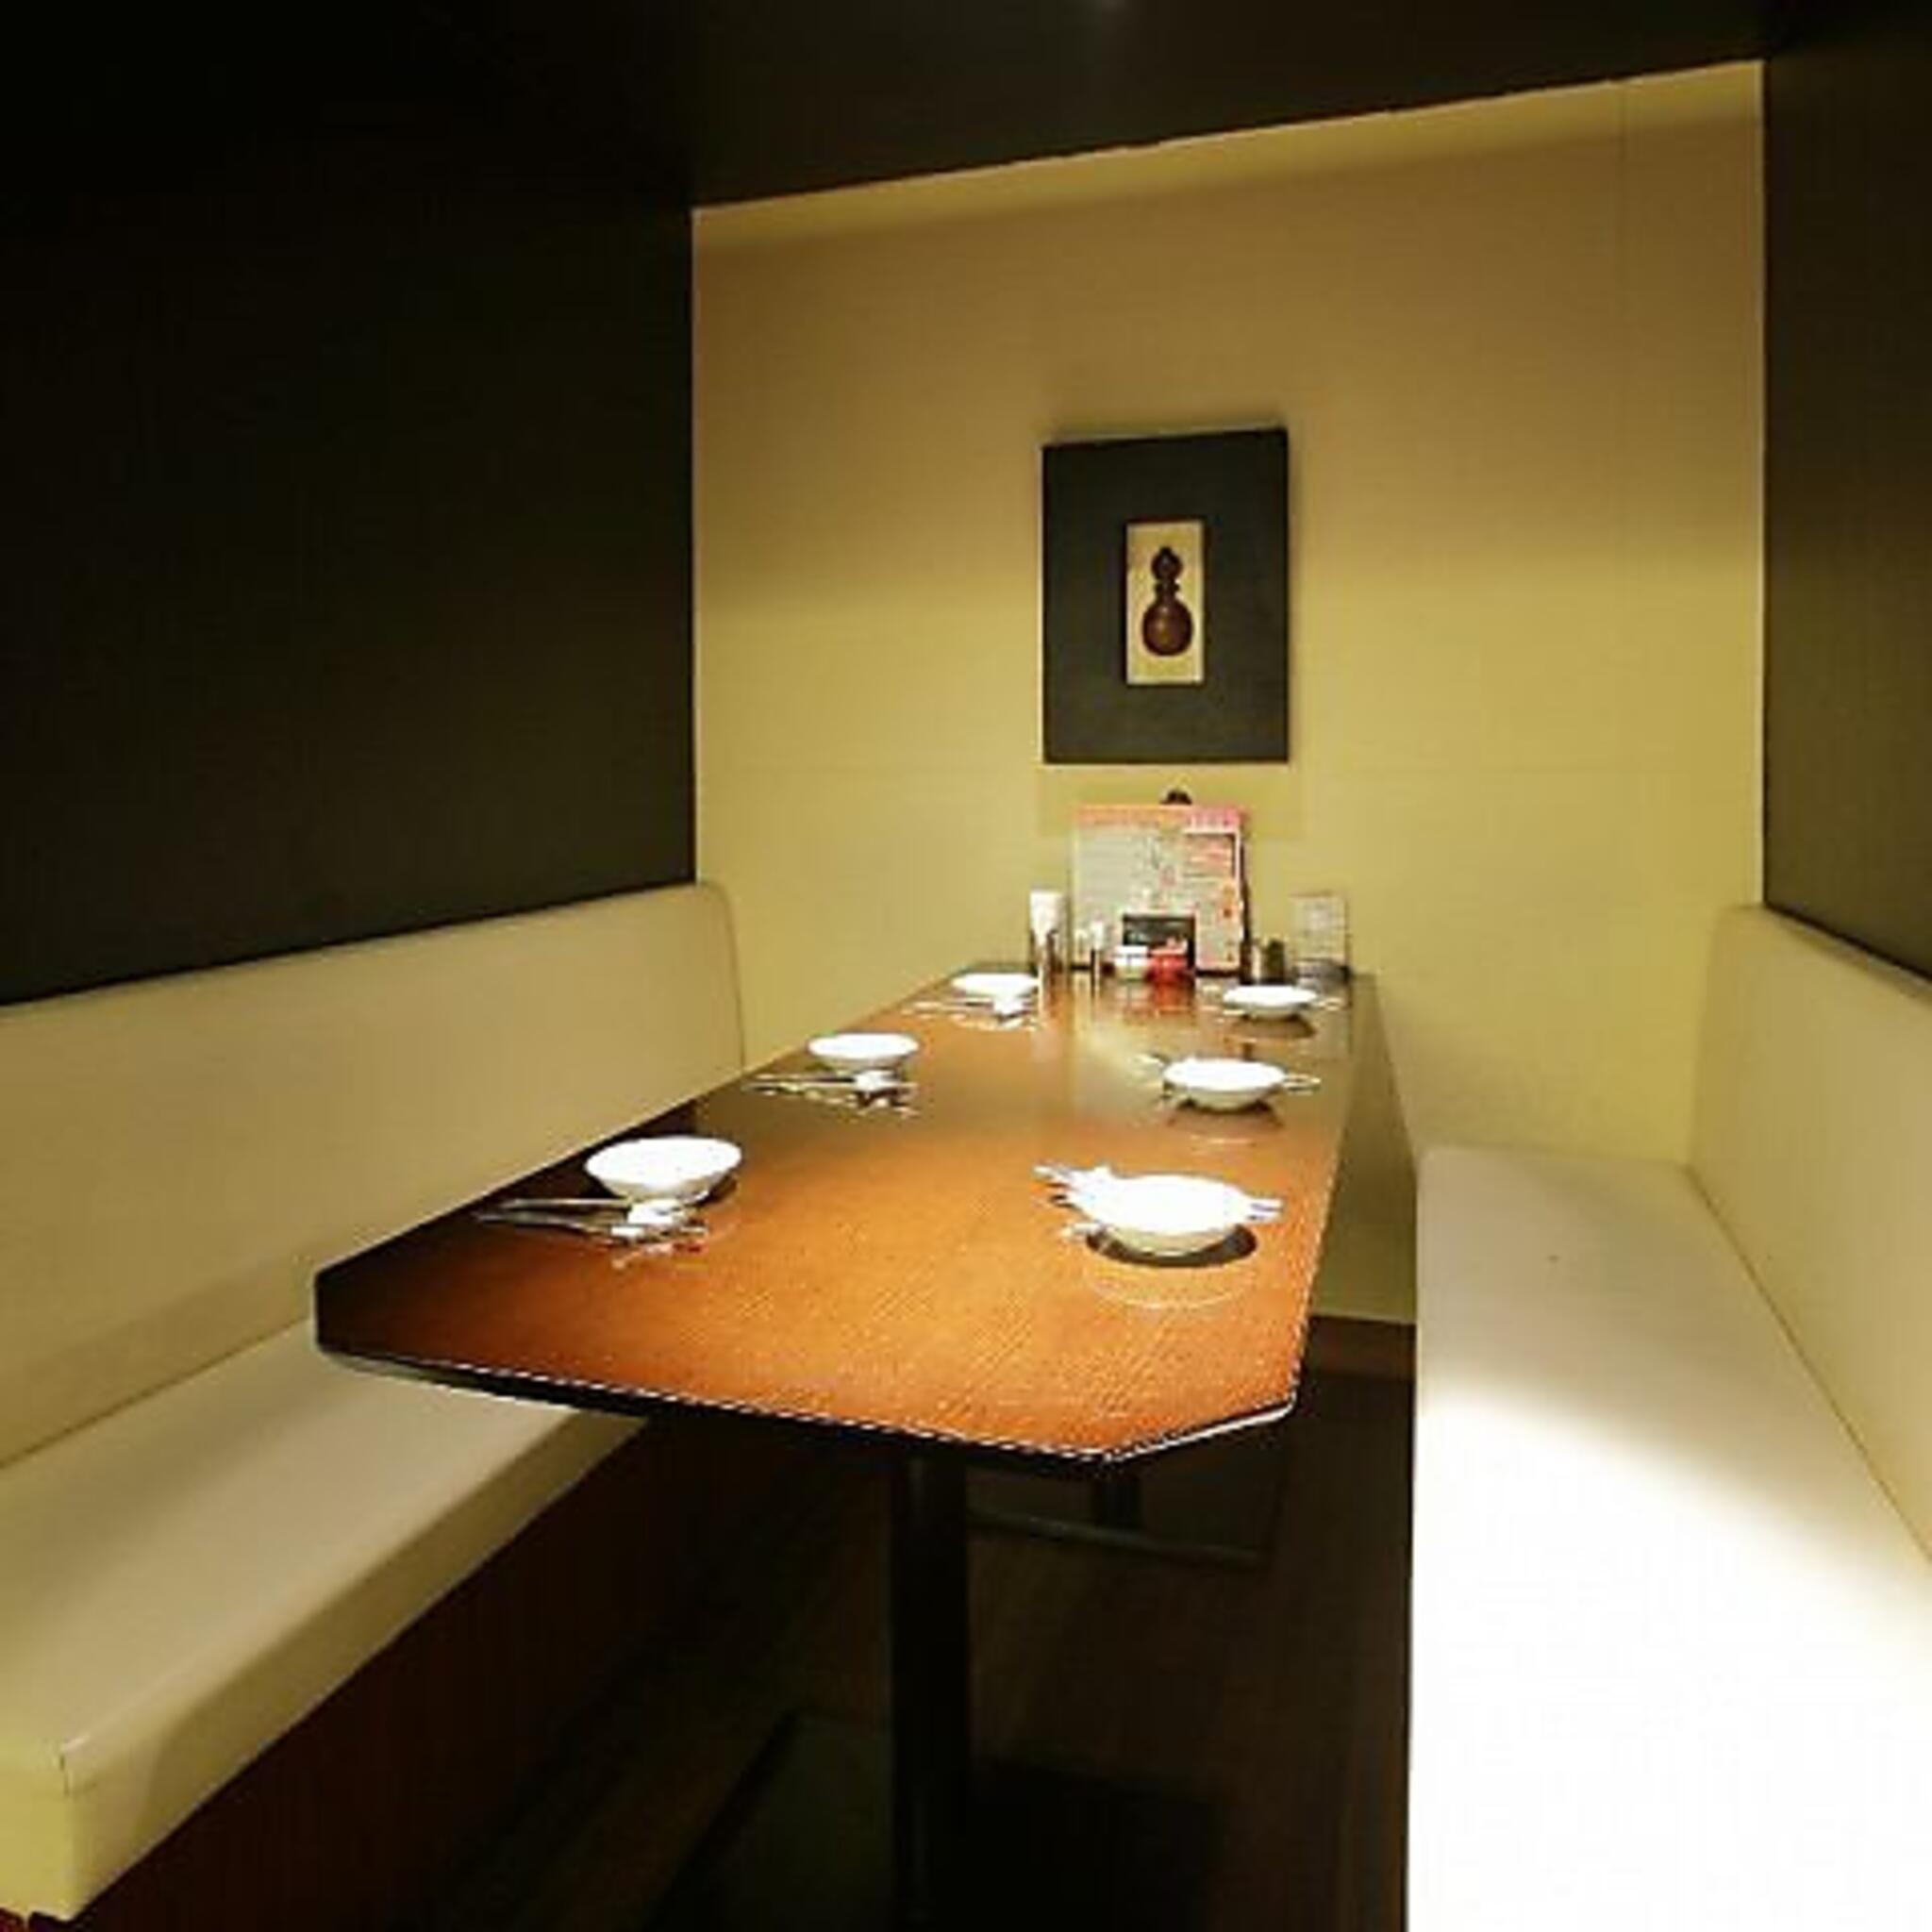 KOREAN DINING 長寿韓酒房 仙台店の代表写真3